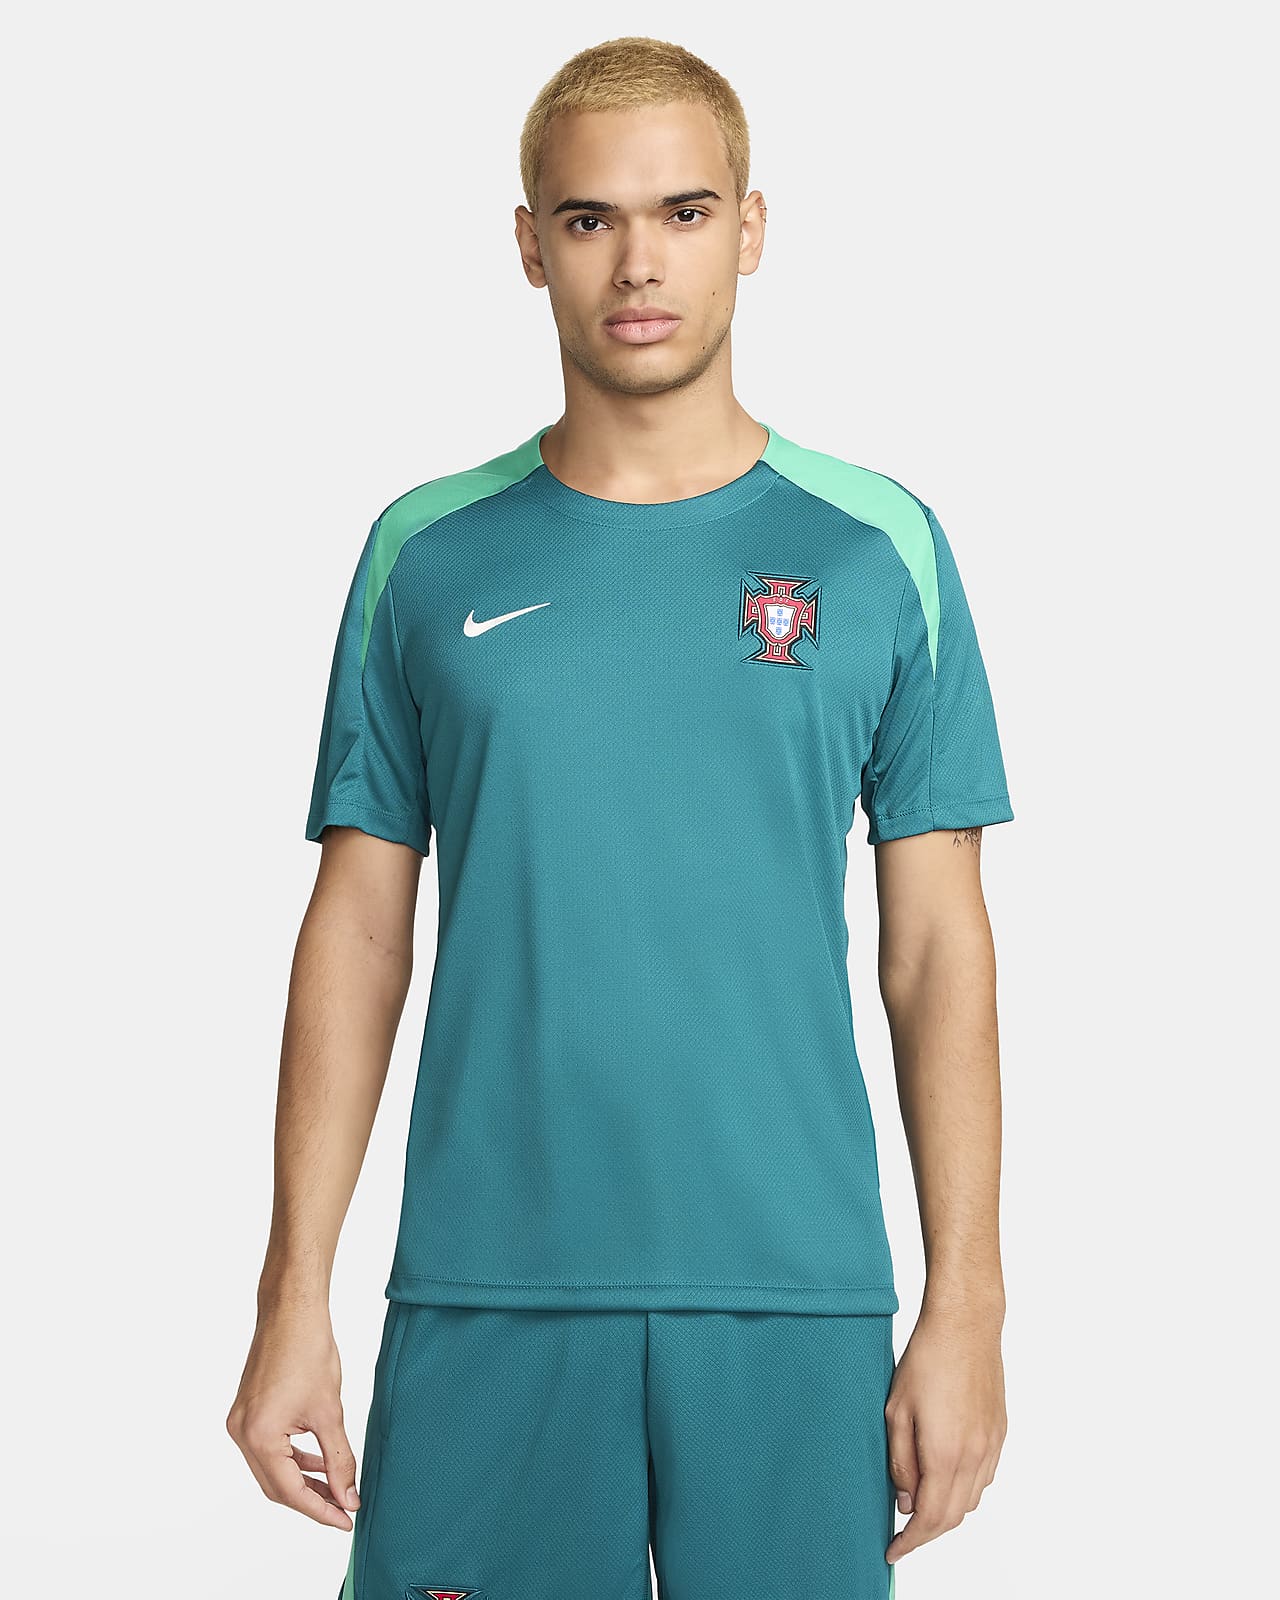 Portugal Strike Nike Dri-FIT rövid ujjú, kötött férfi futballfelső